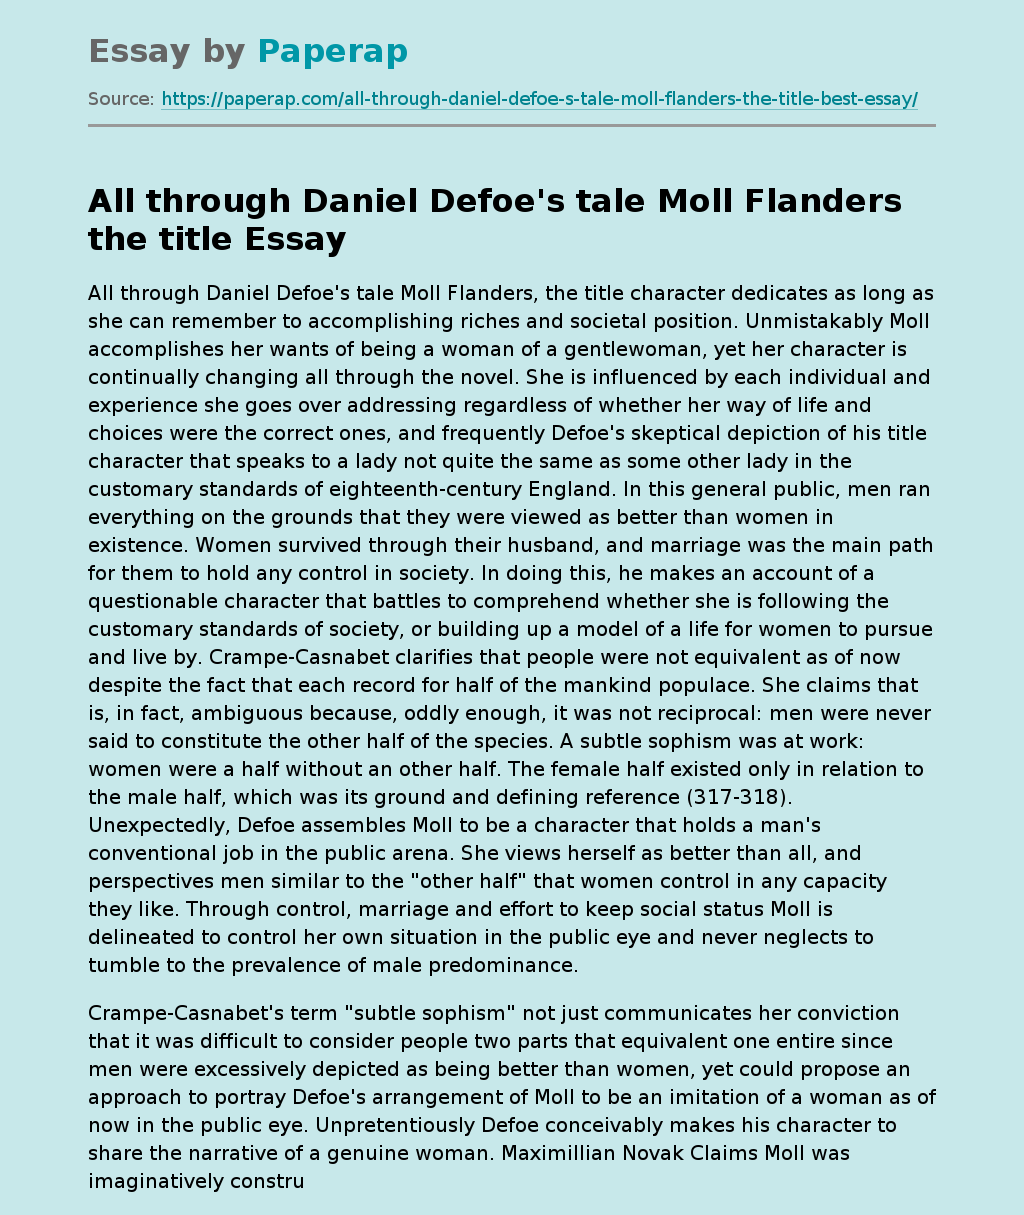 All through Daniel Defoe's tale Moll Flanders the title